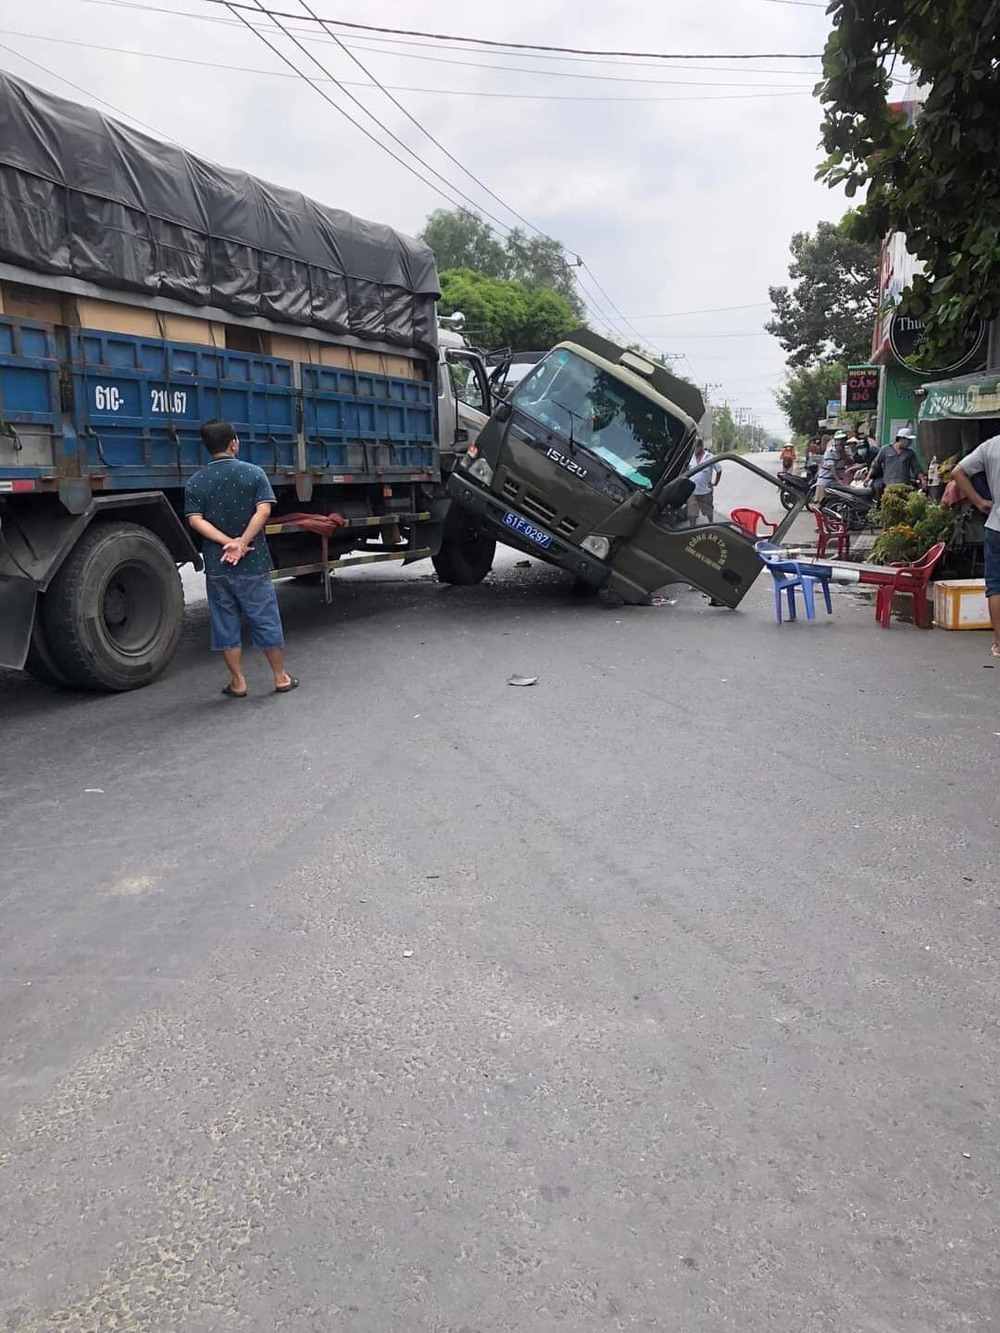 Prisoner car crashes into truck in Saigon, 3 people injured - Photo 1.